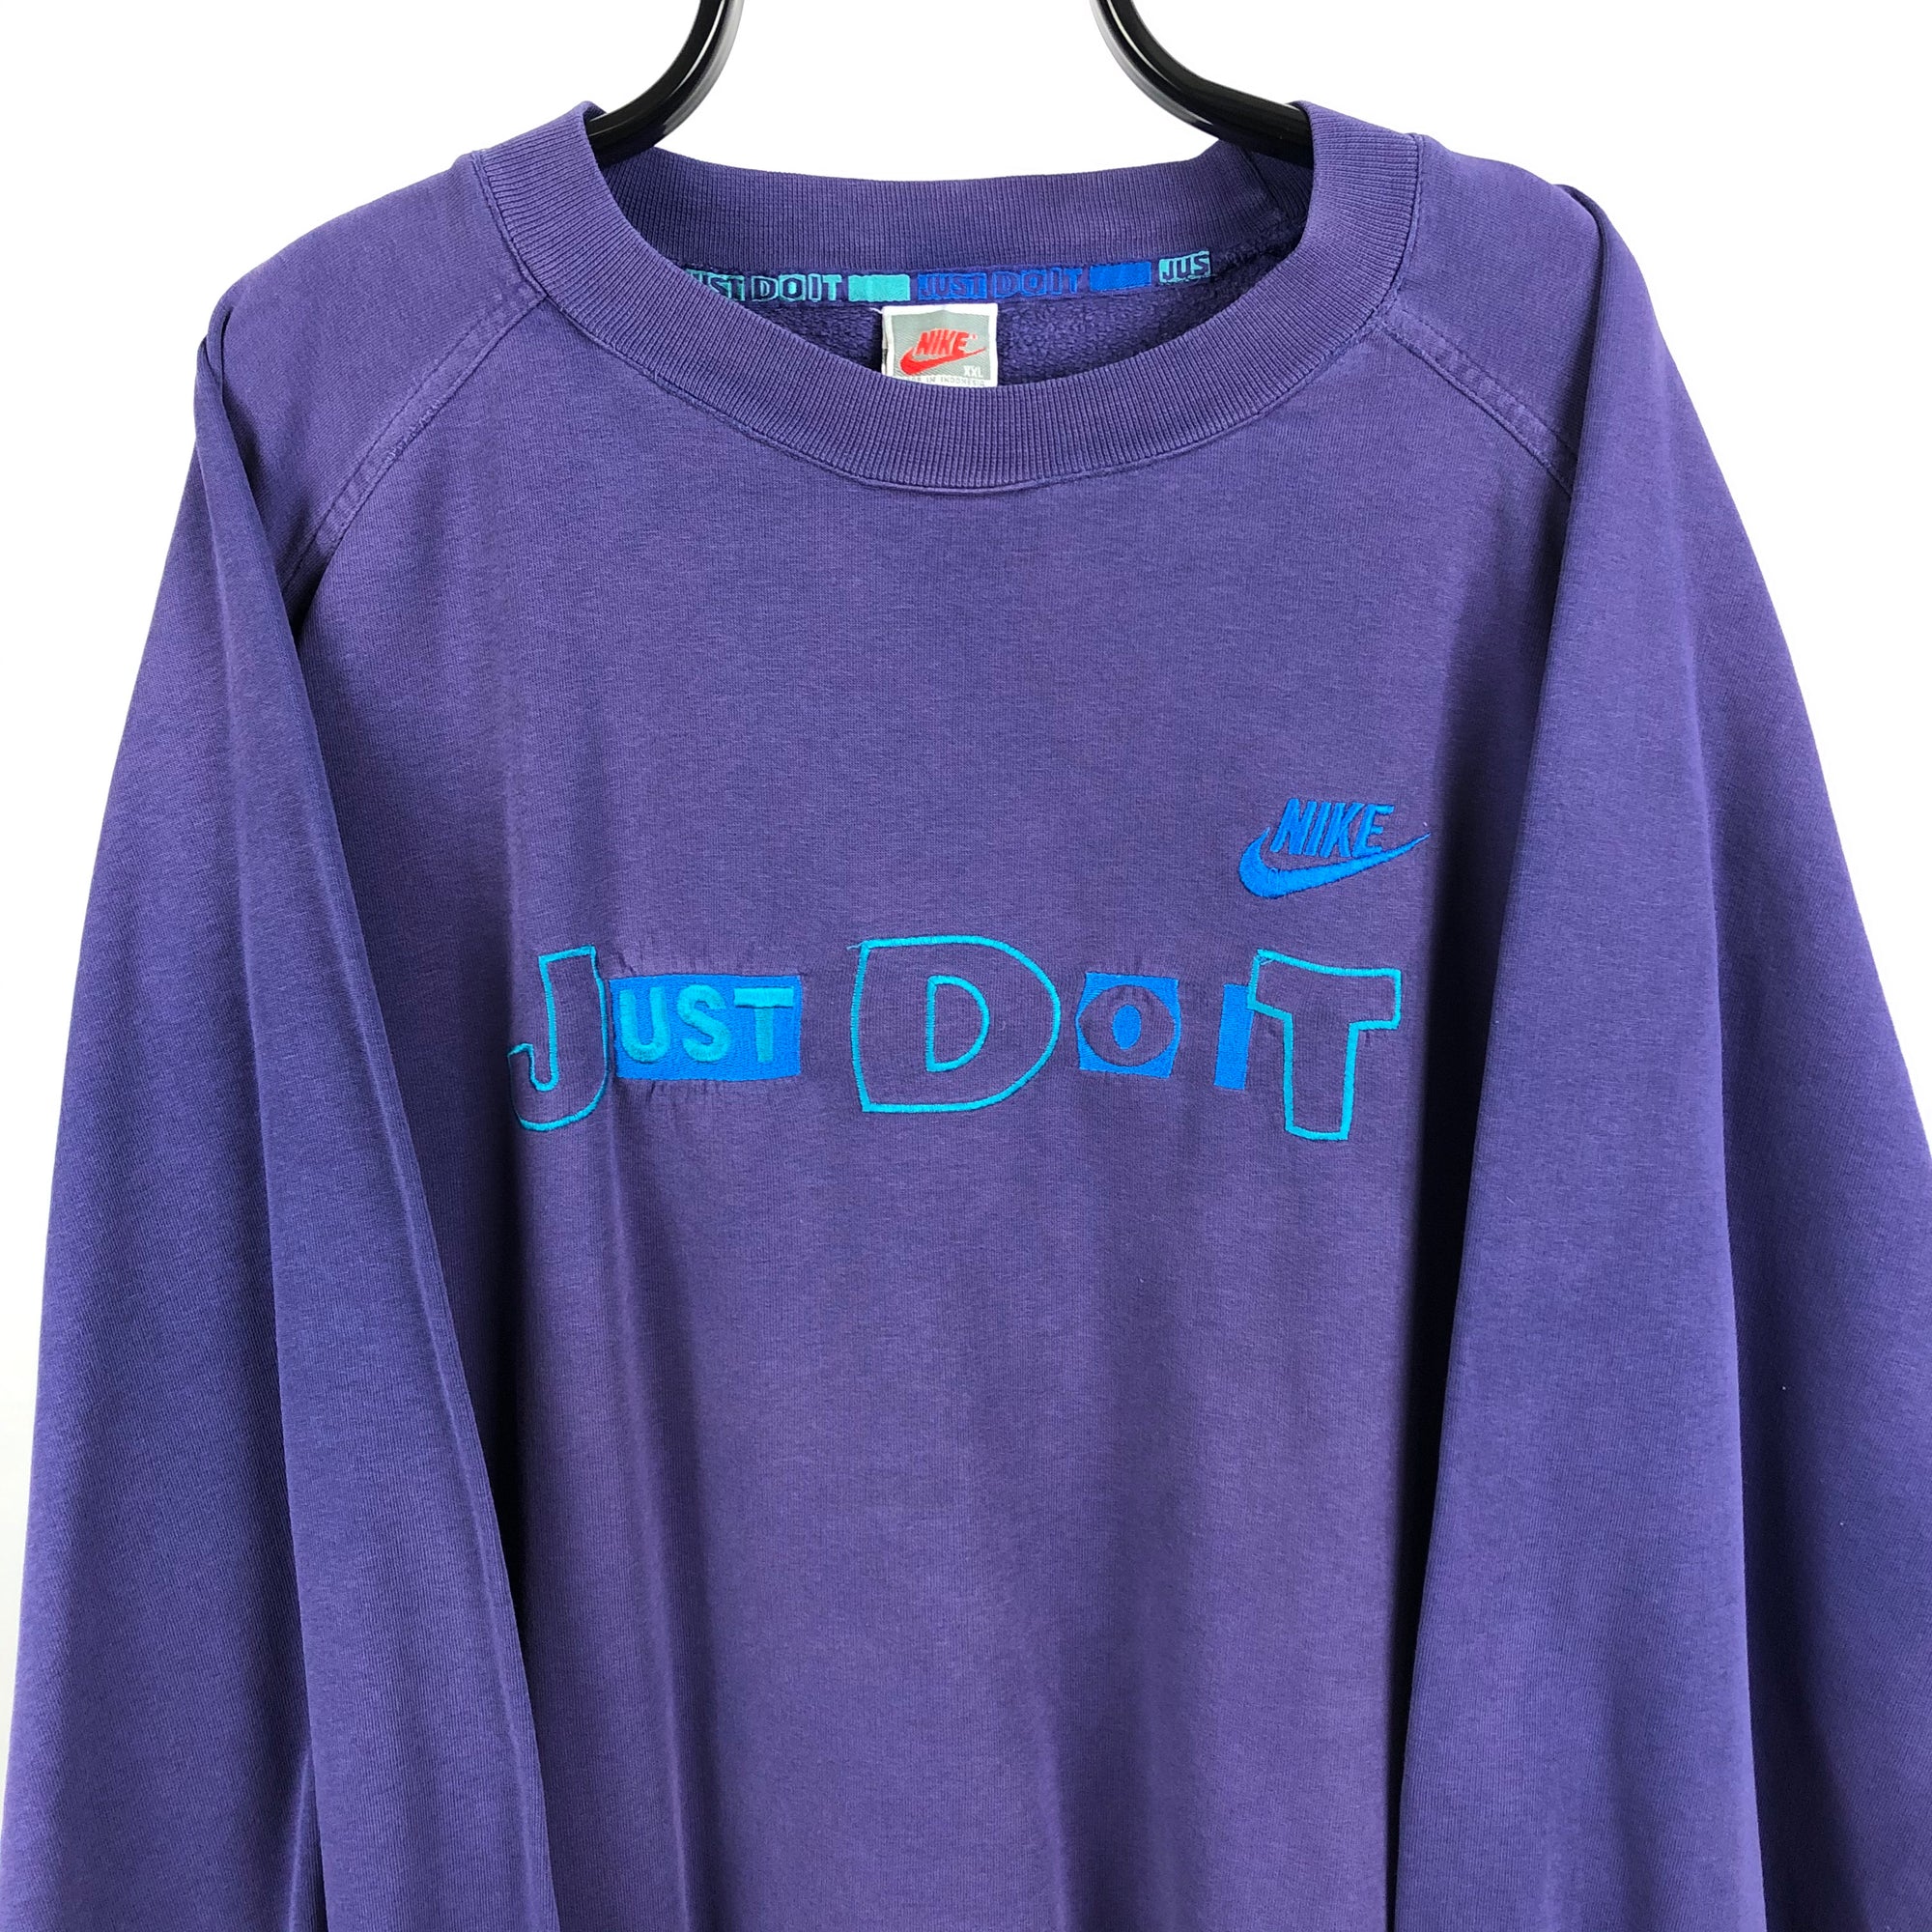 Vintage 80s Nike 'Just Do It' Sweatshirt - Men's XXL/Women's XXXL